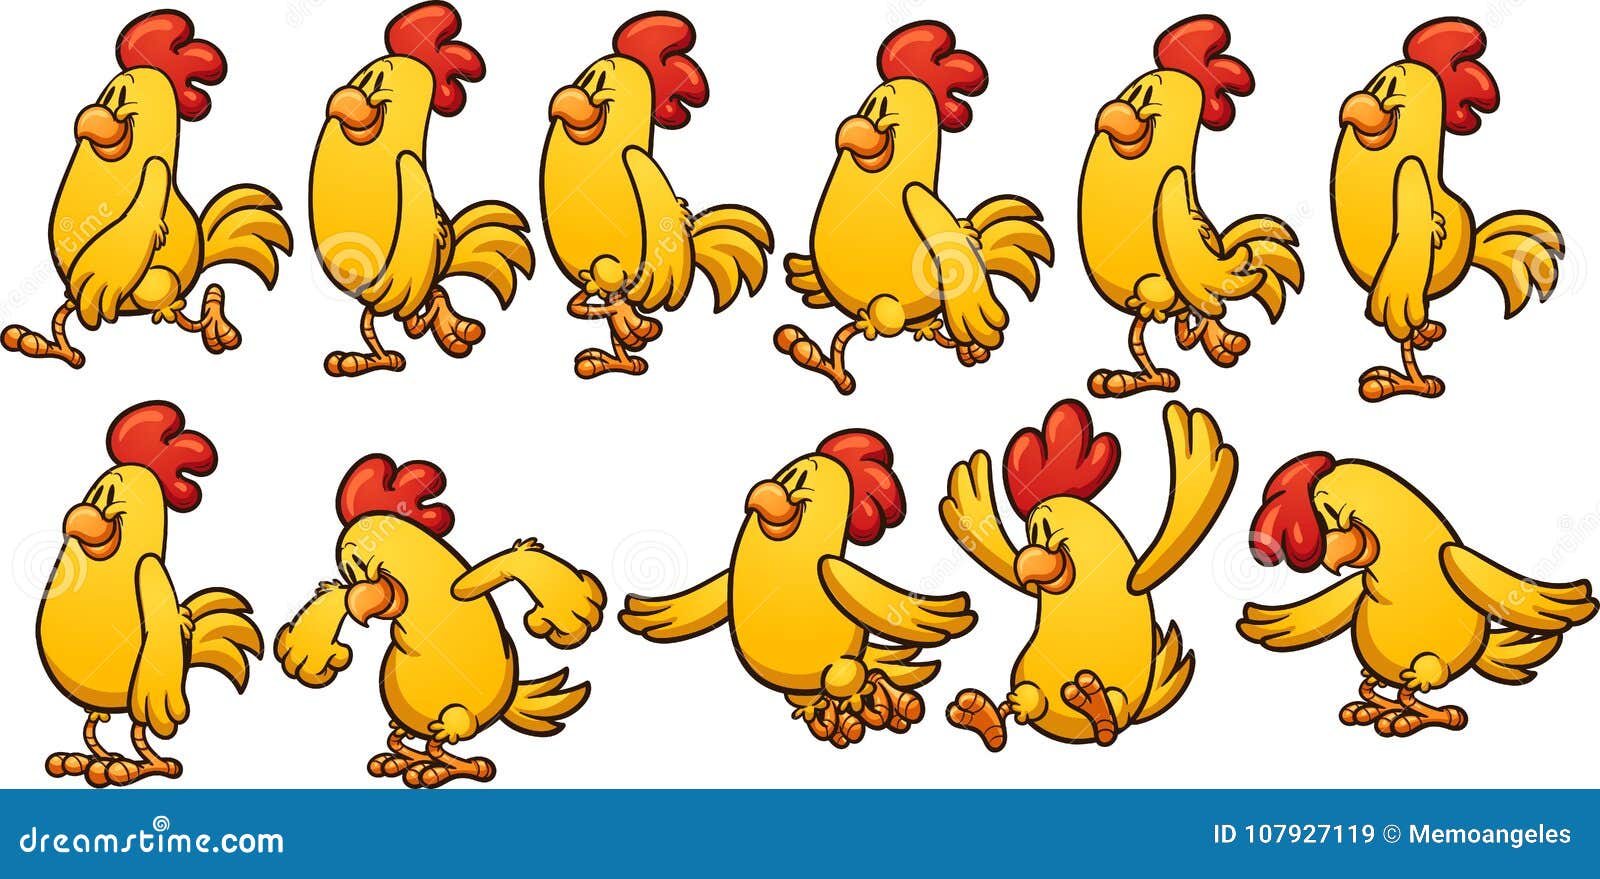 yellow chicken animation